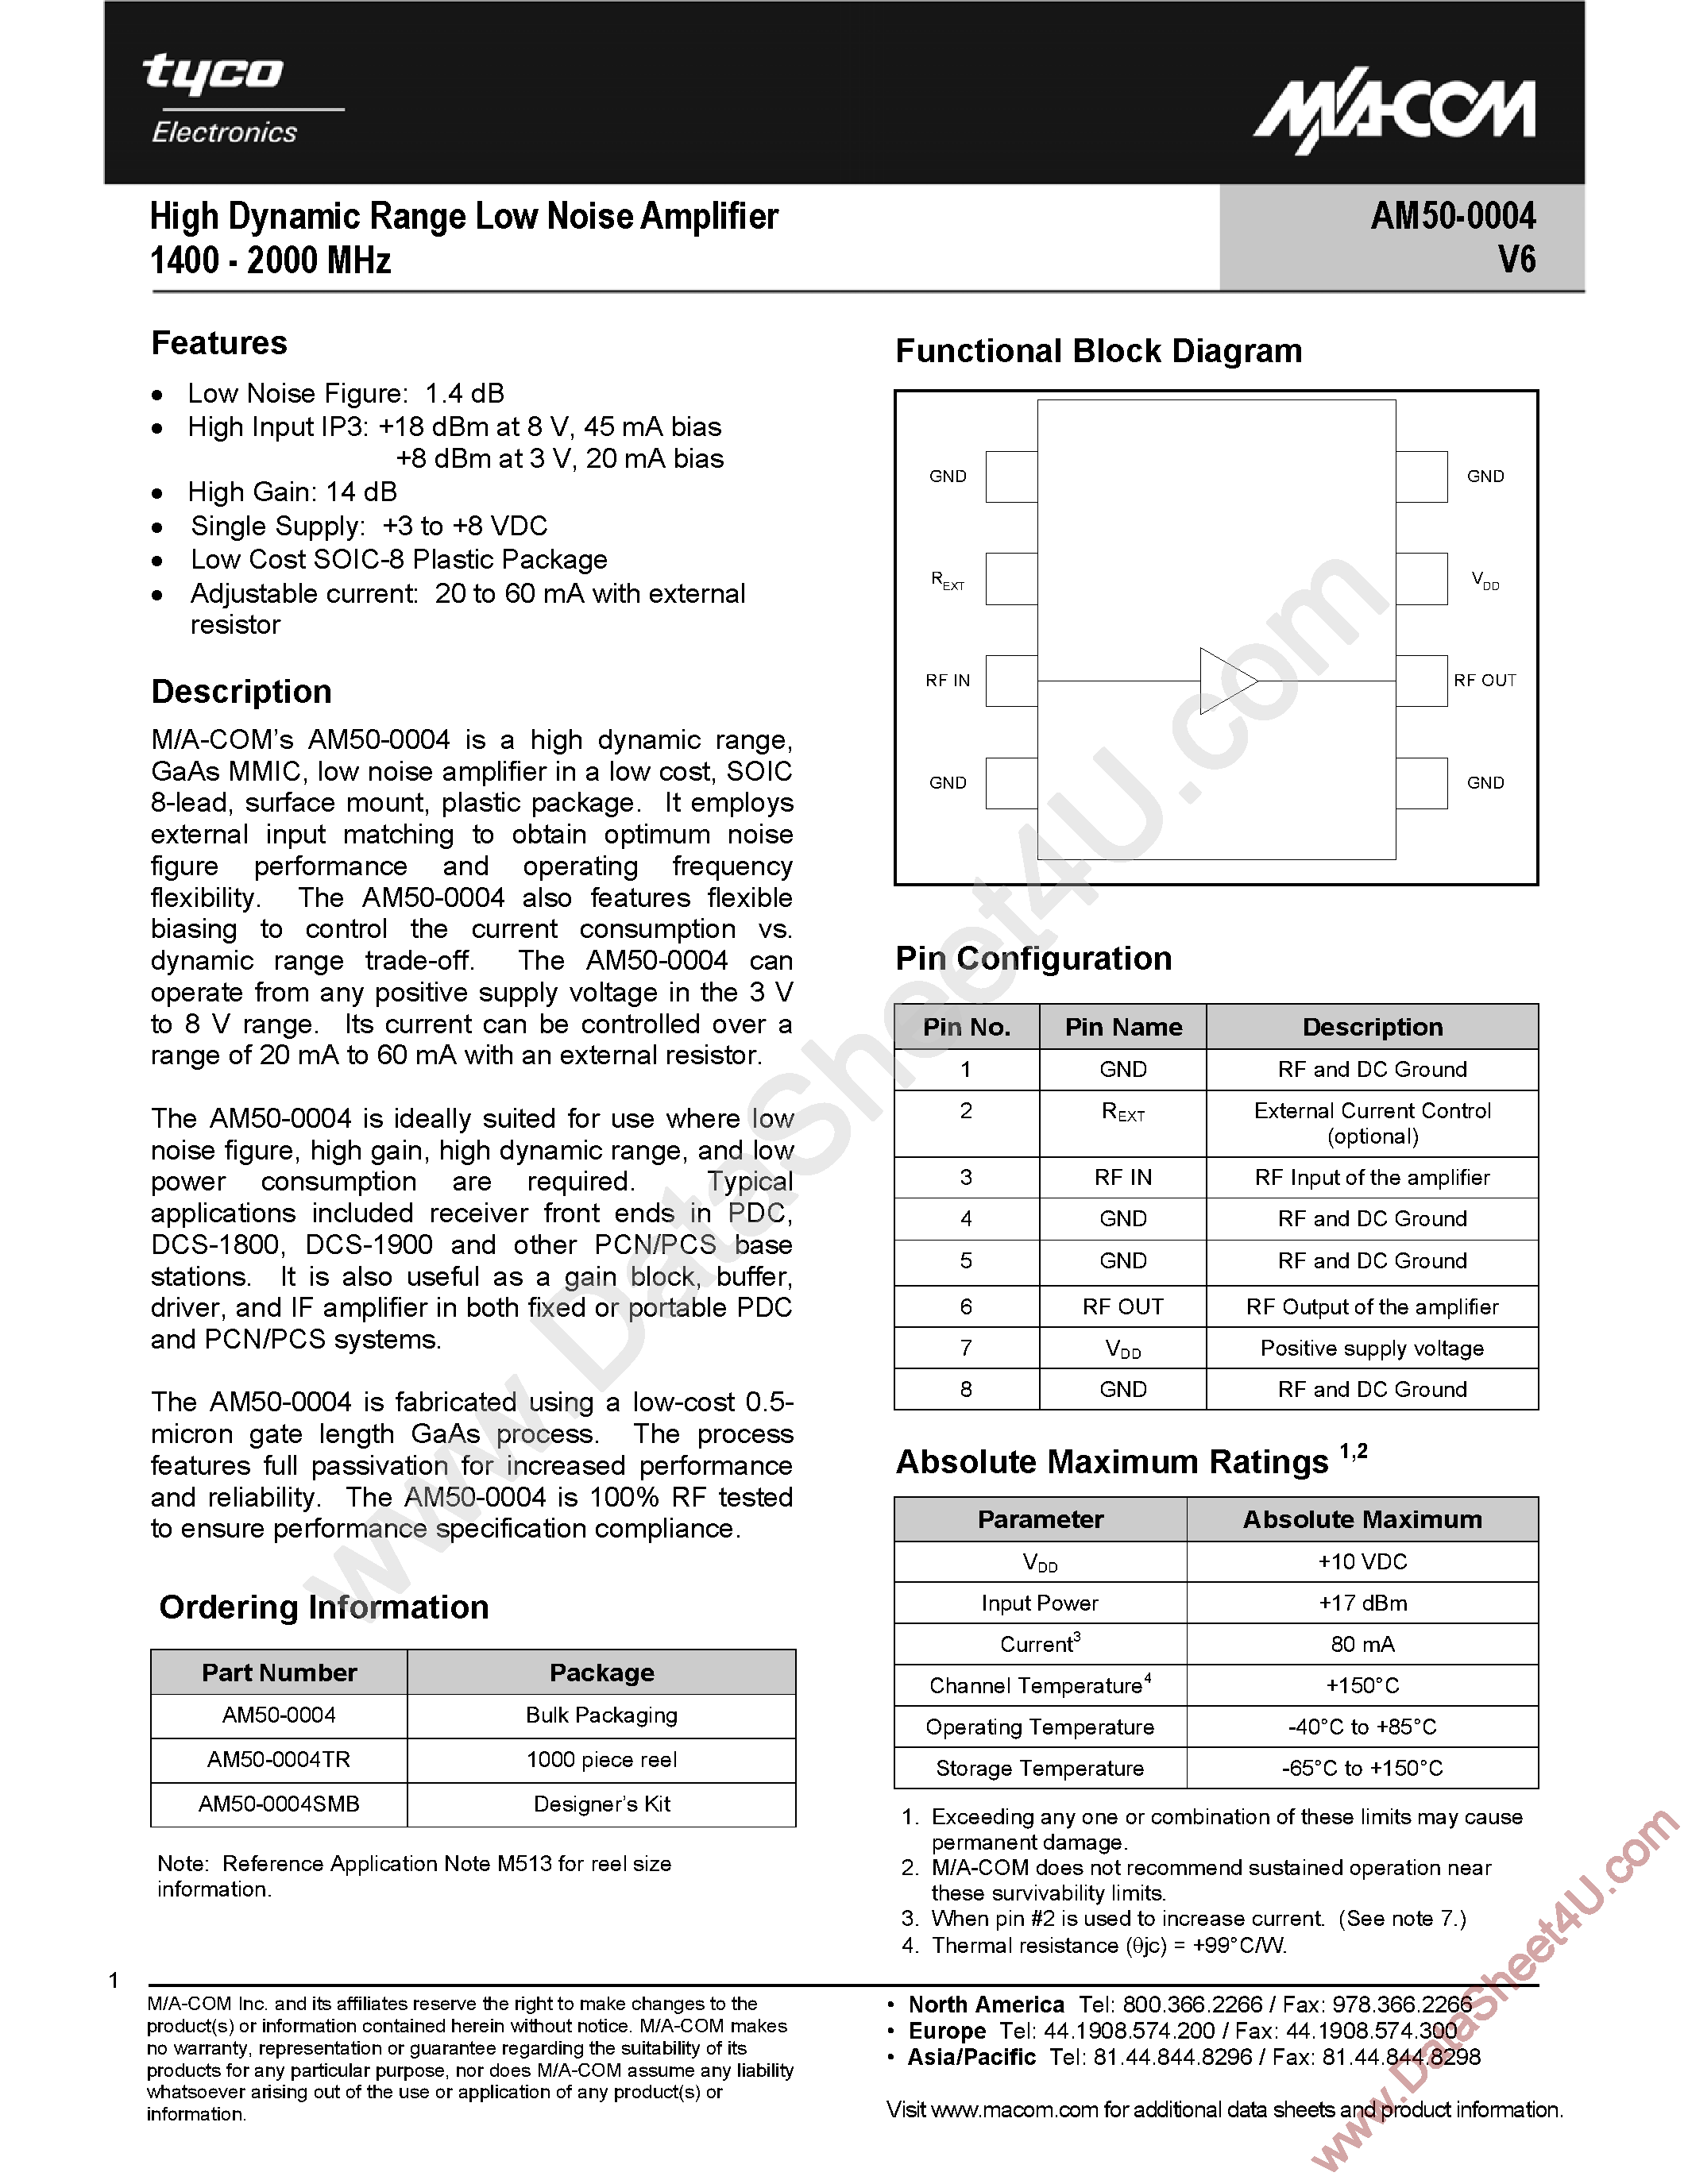 Datasheet AM50-0004V6 - High Dynamic Range Low Noise Amplifier page 1